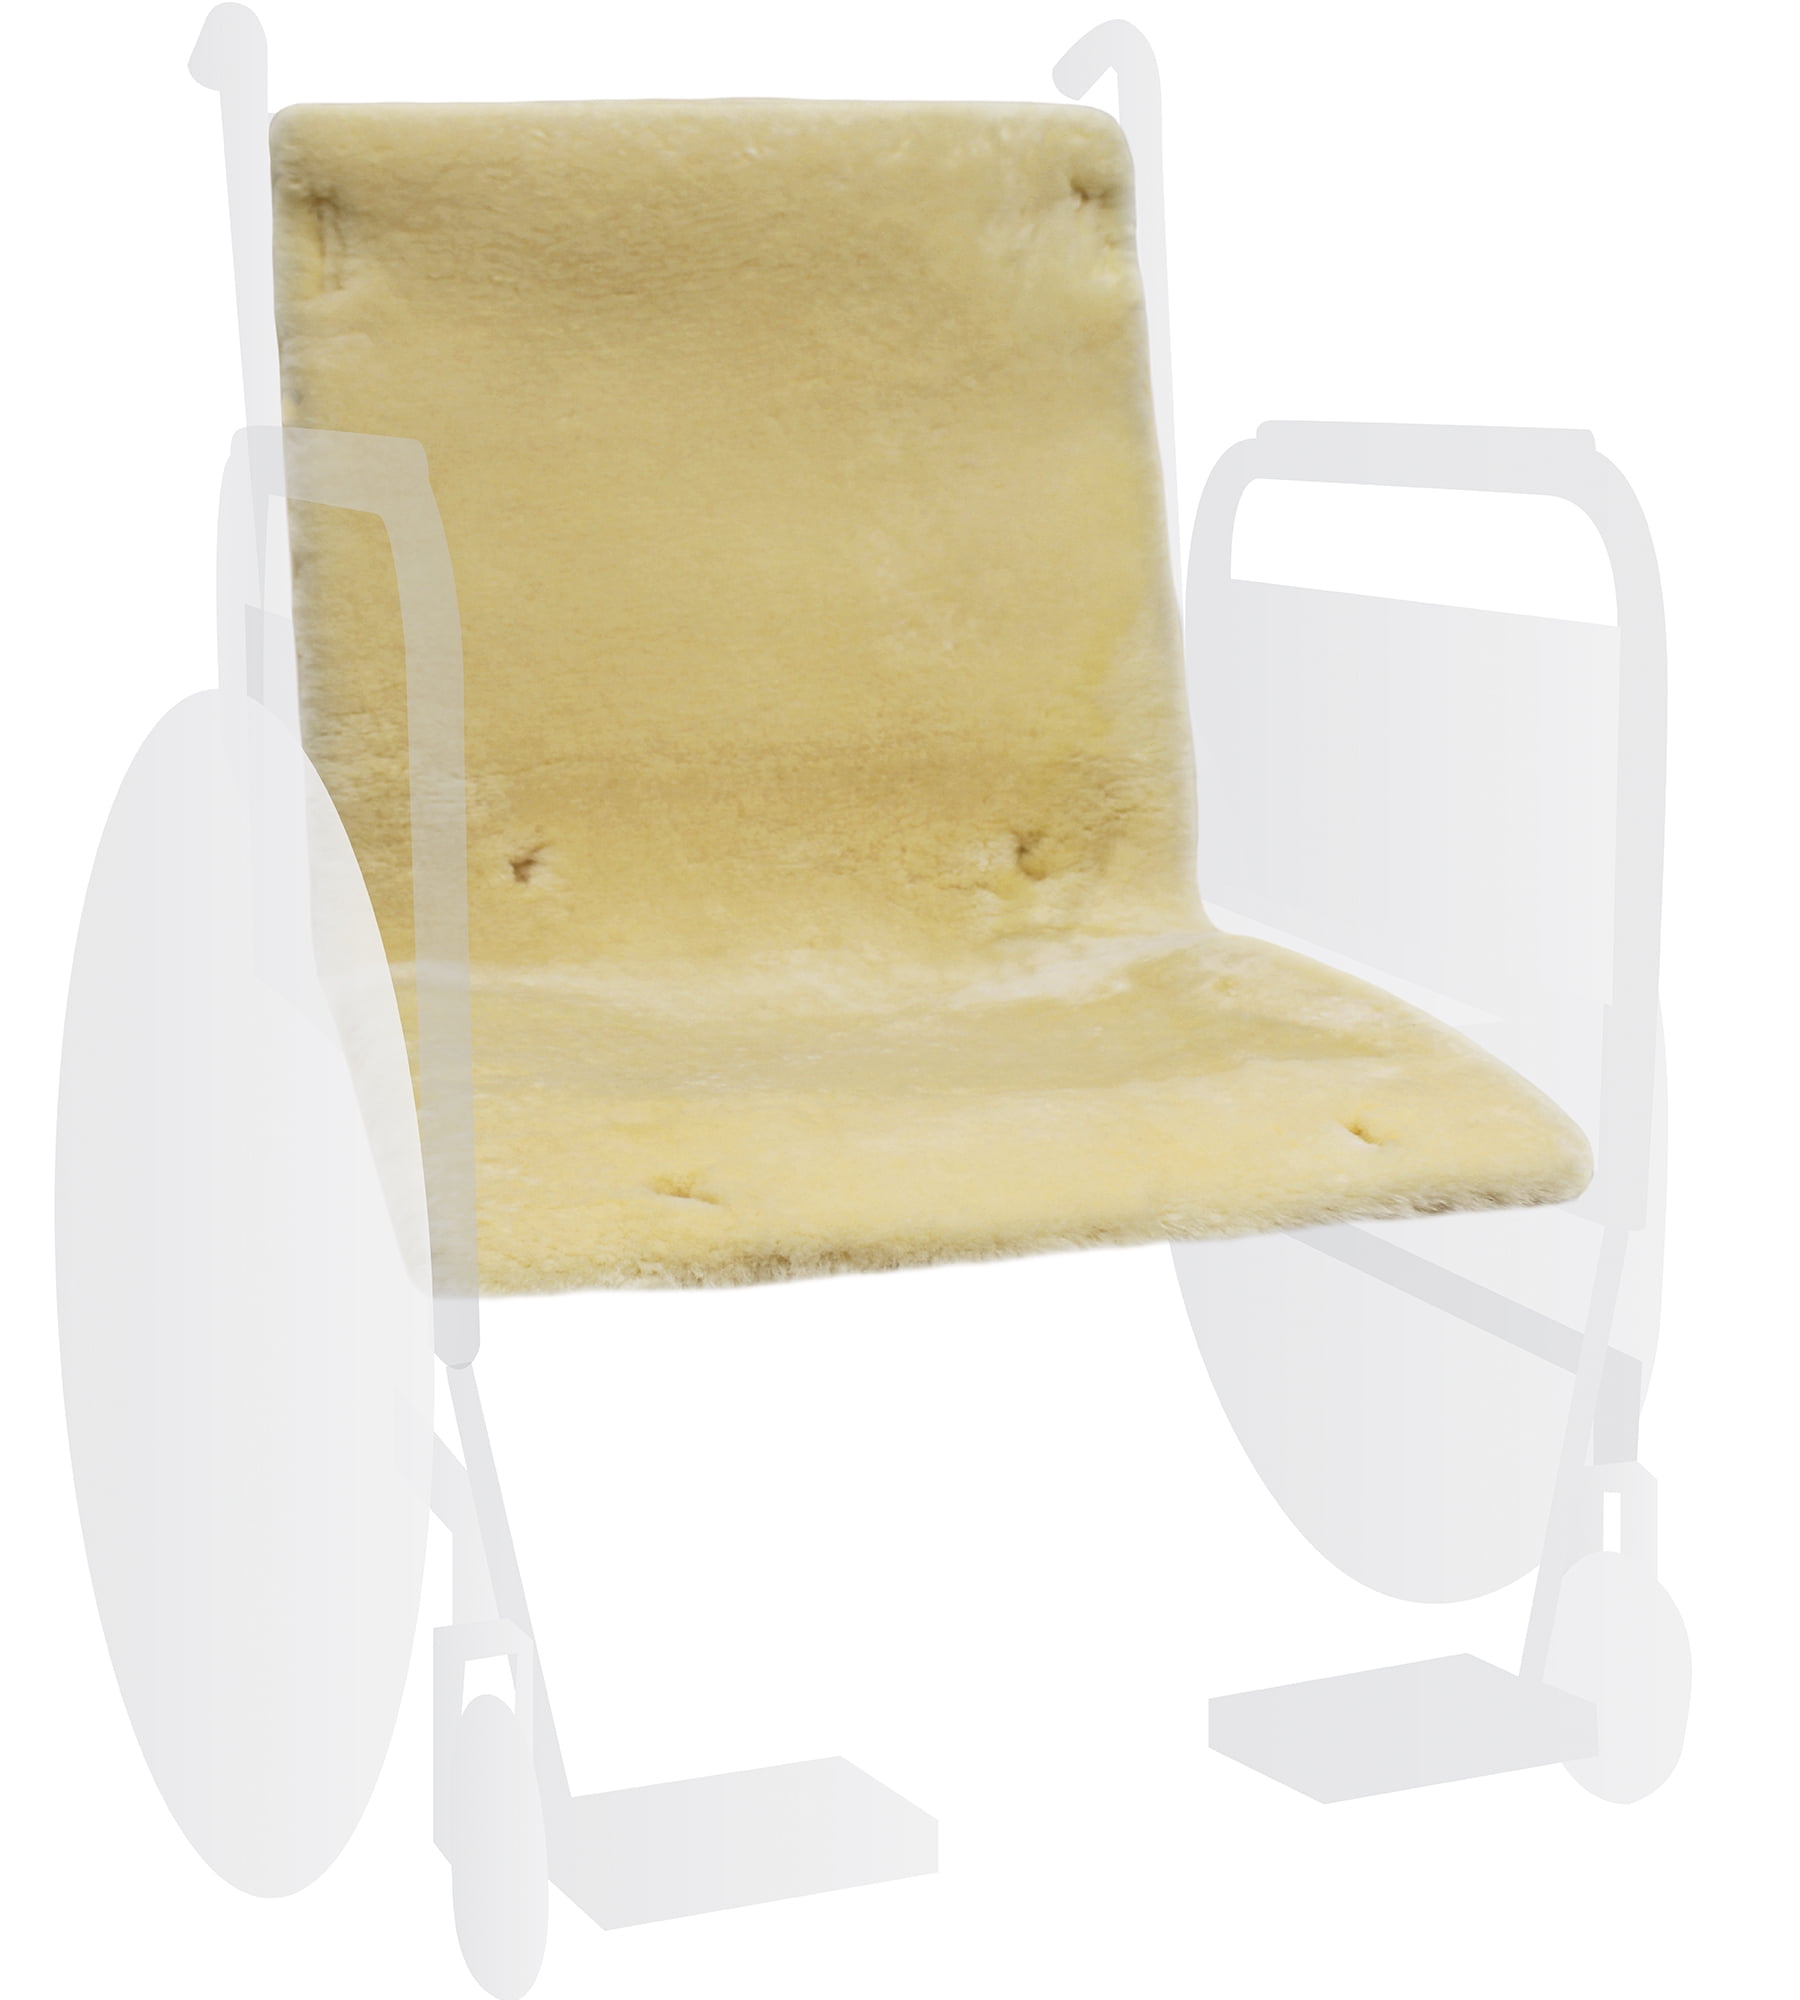 Medical Sheepskin Wheelchair Seat Cover - 100% Genuine Sheepskin - Each